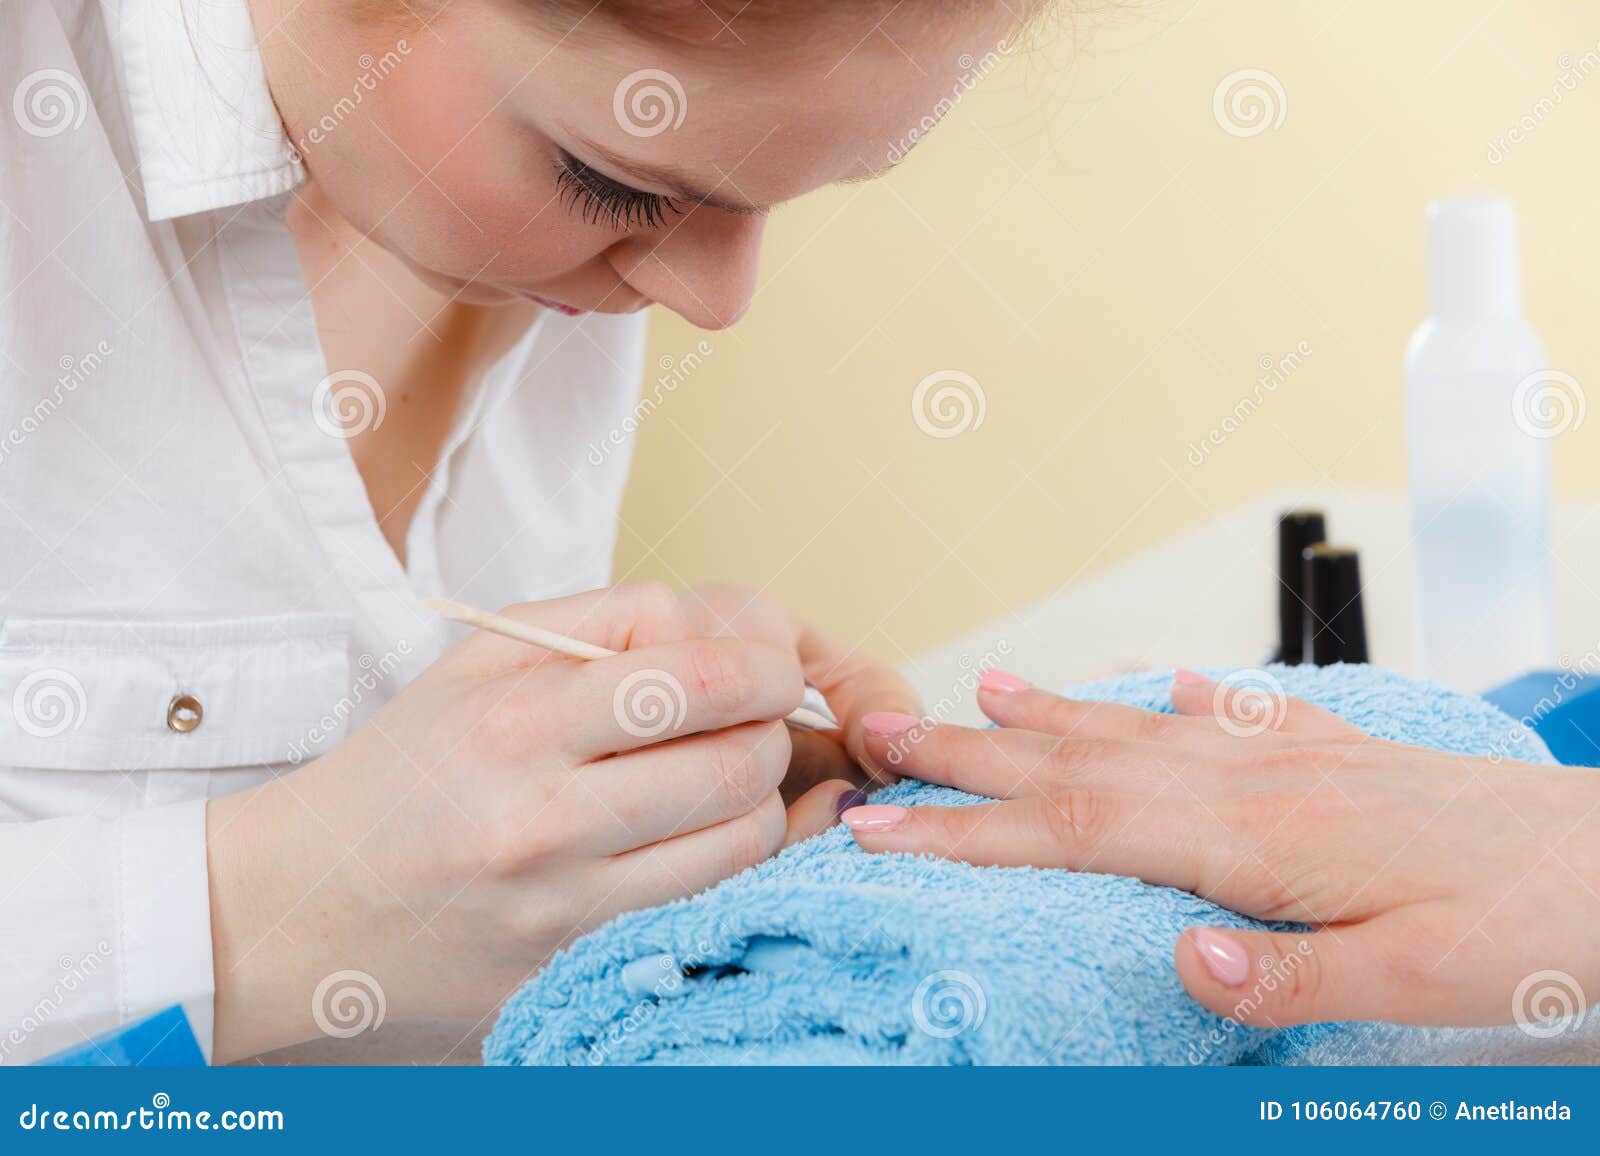 beautician preparing nails before manicure, pushing back cuticles